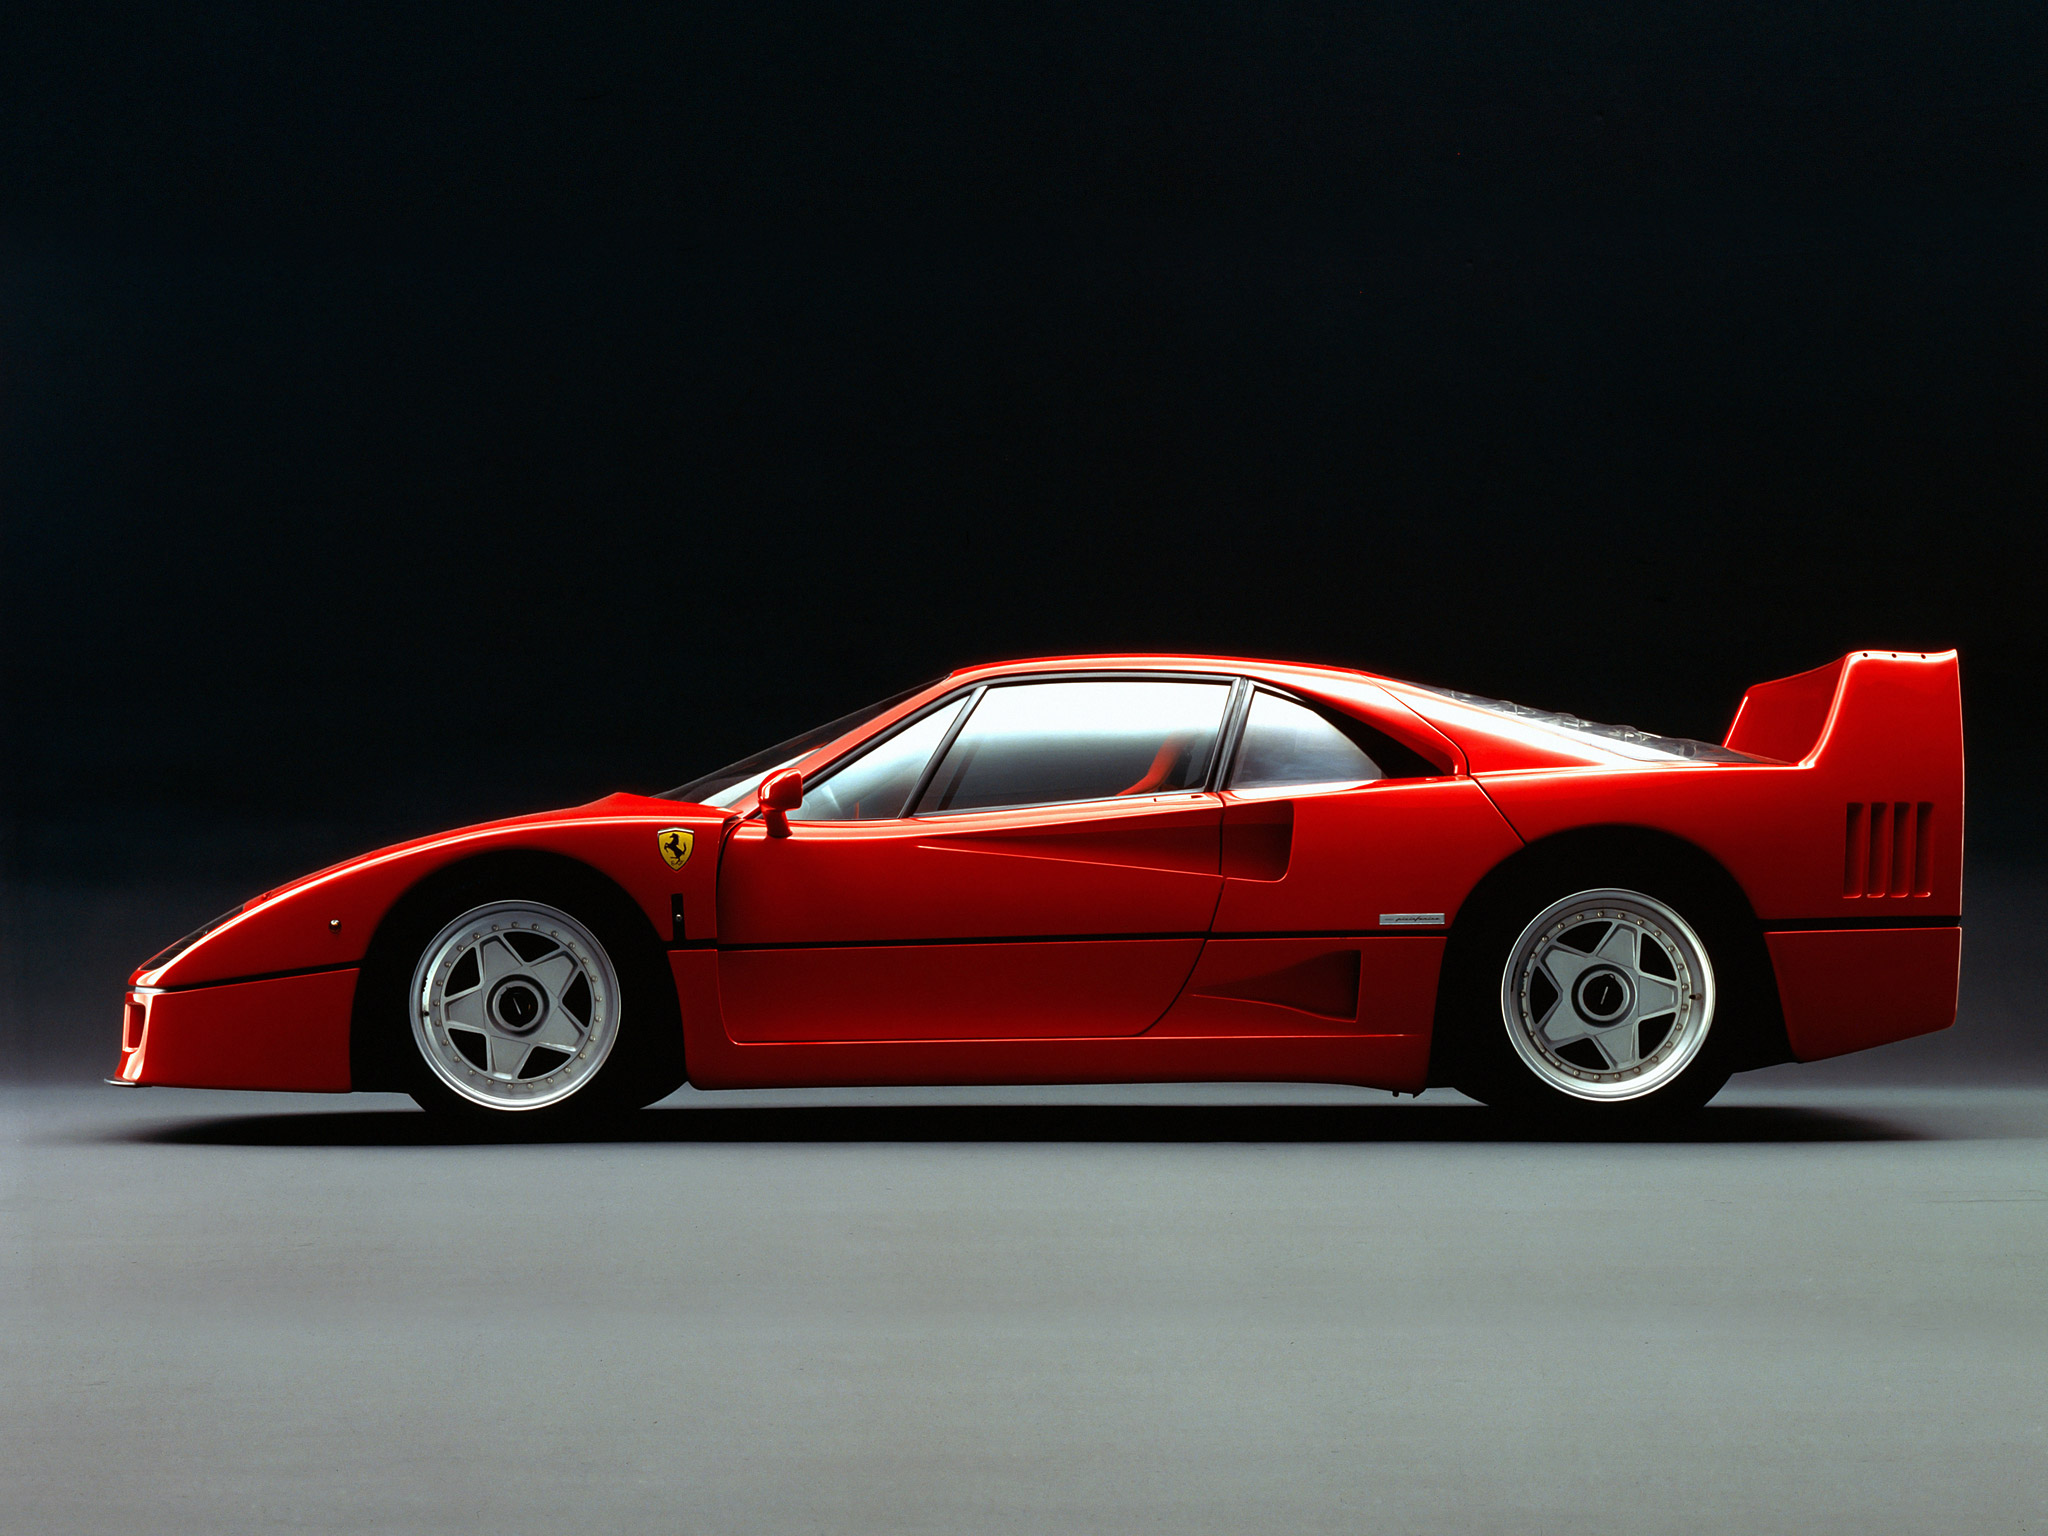  1987 Ferrari F40 Wallpaper.